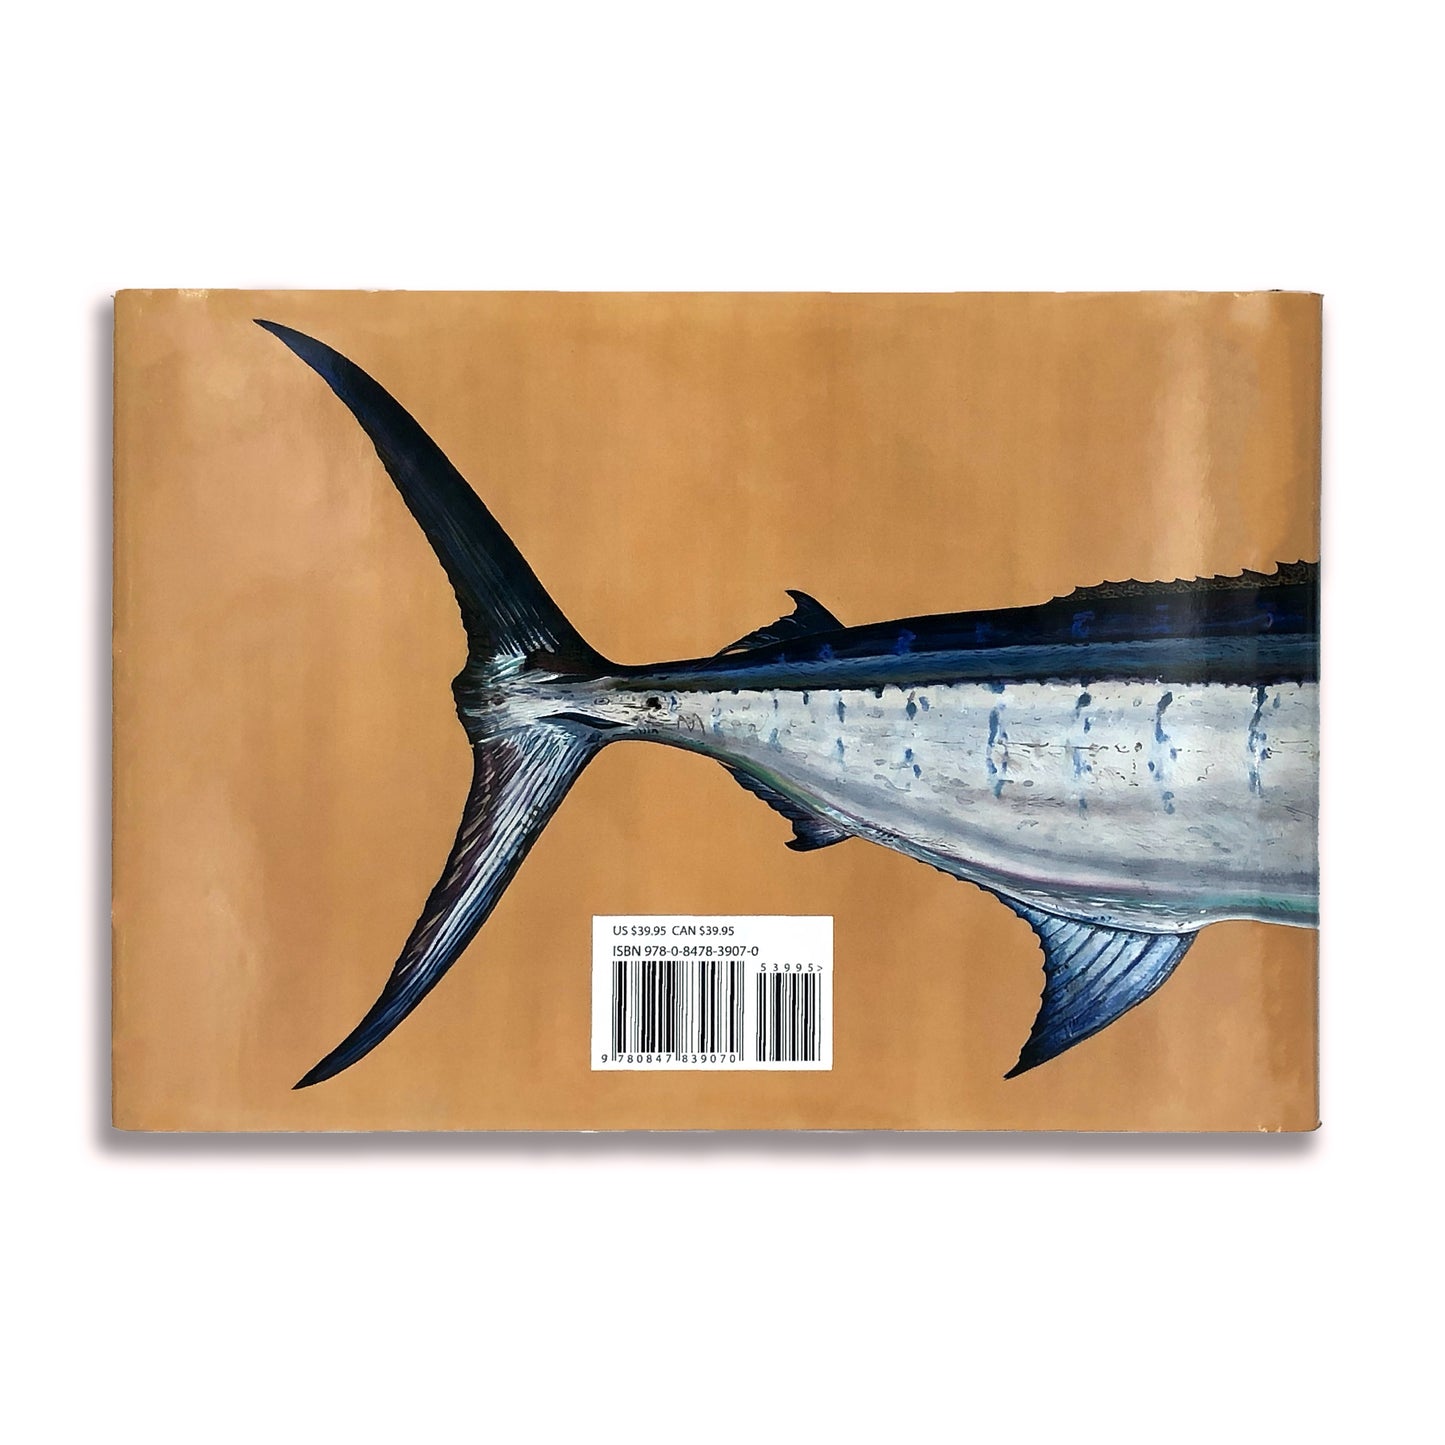 Ocean Fishes: Paintings of Saltwater Fish - James Prosek (hardcover)